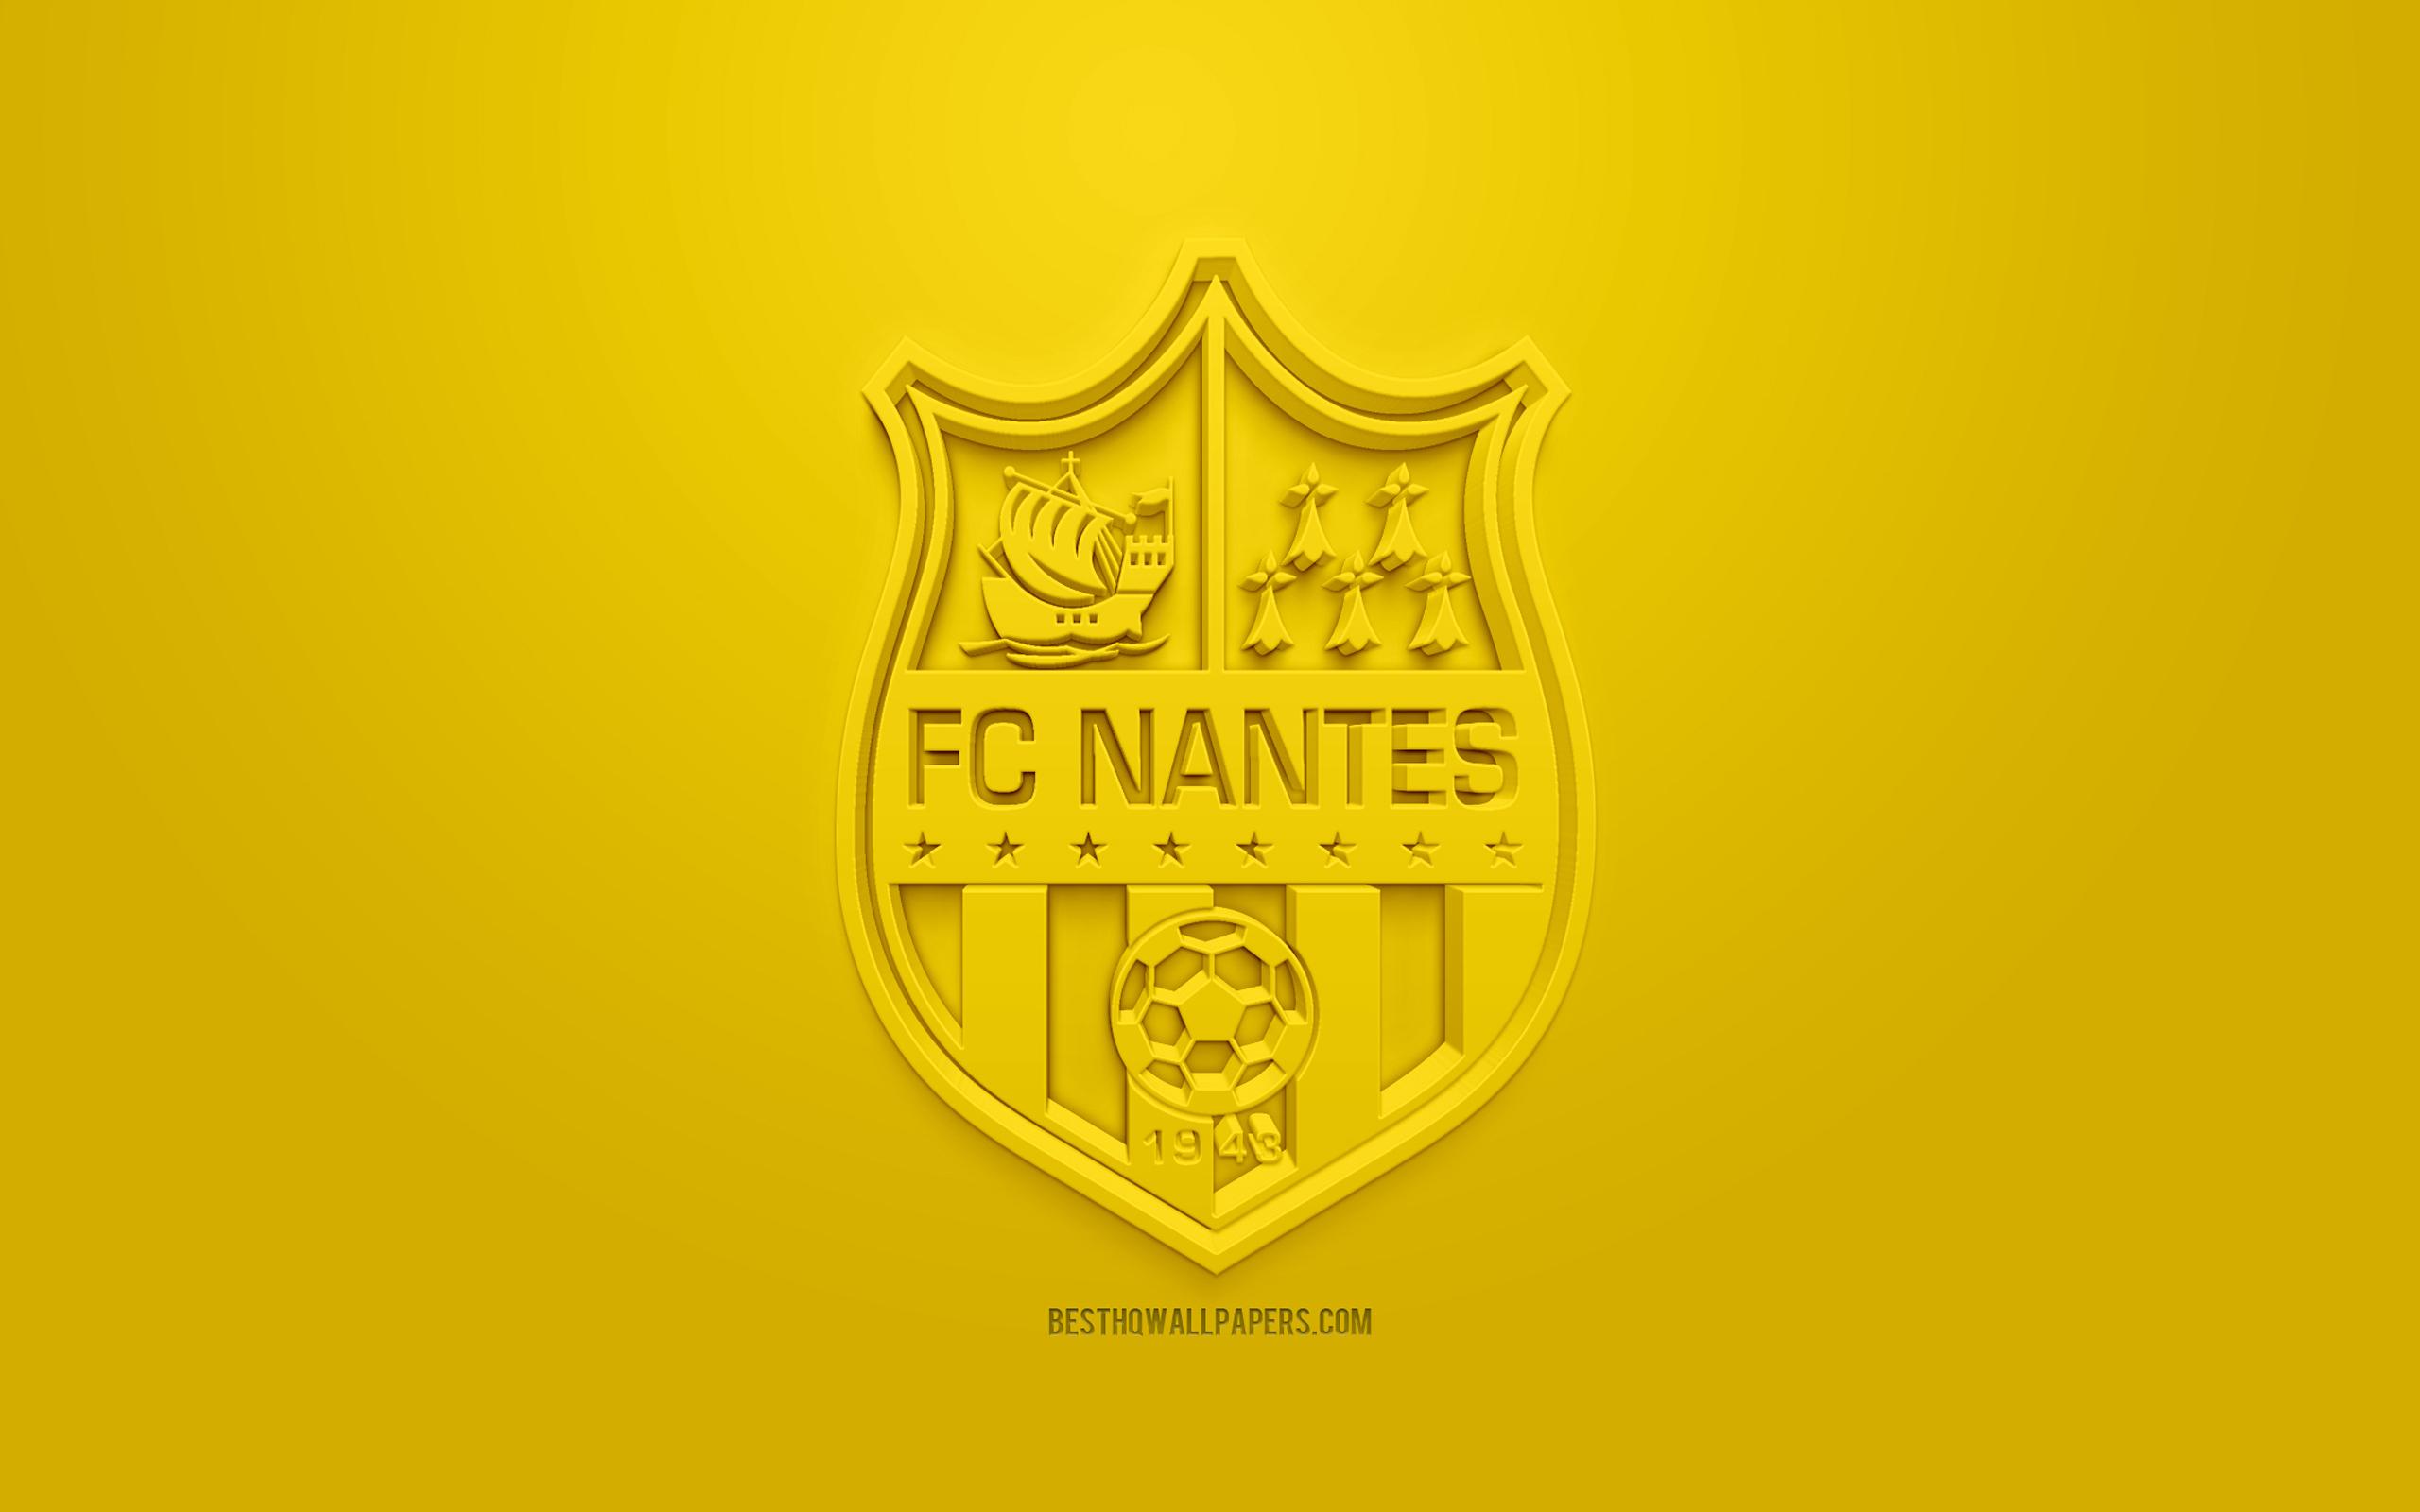 Download wallpaper FC Nantes, creative 3D logo, yellow background